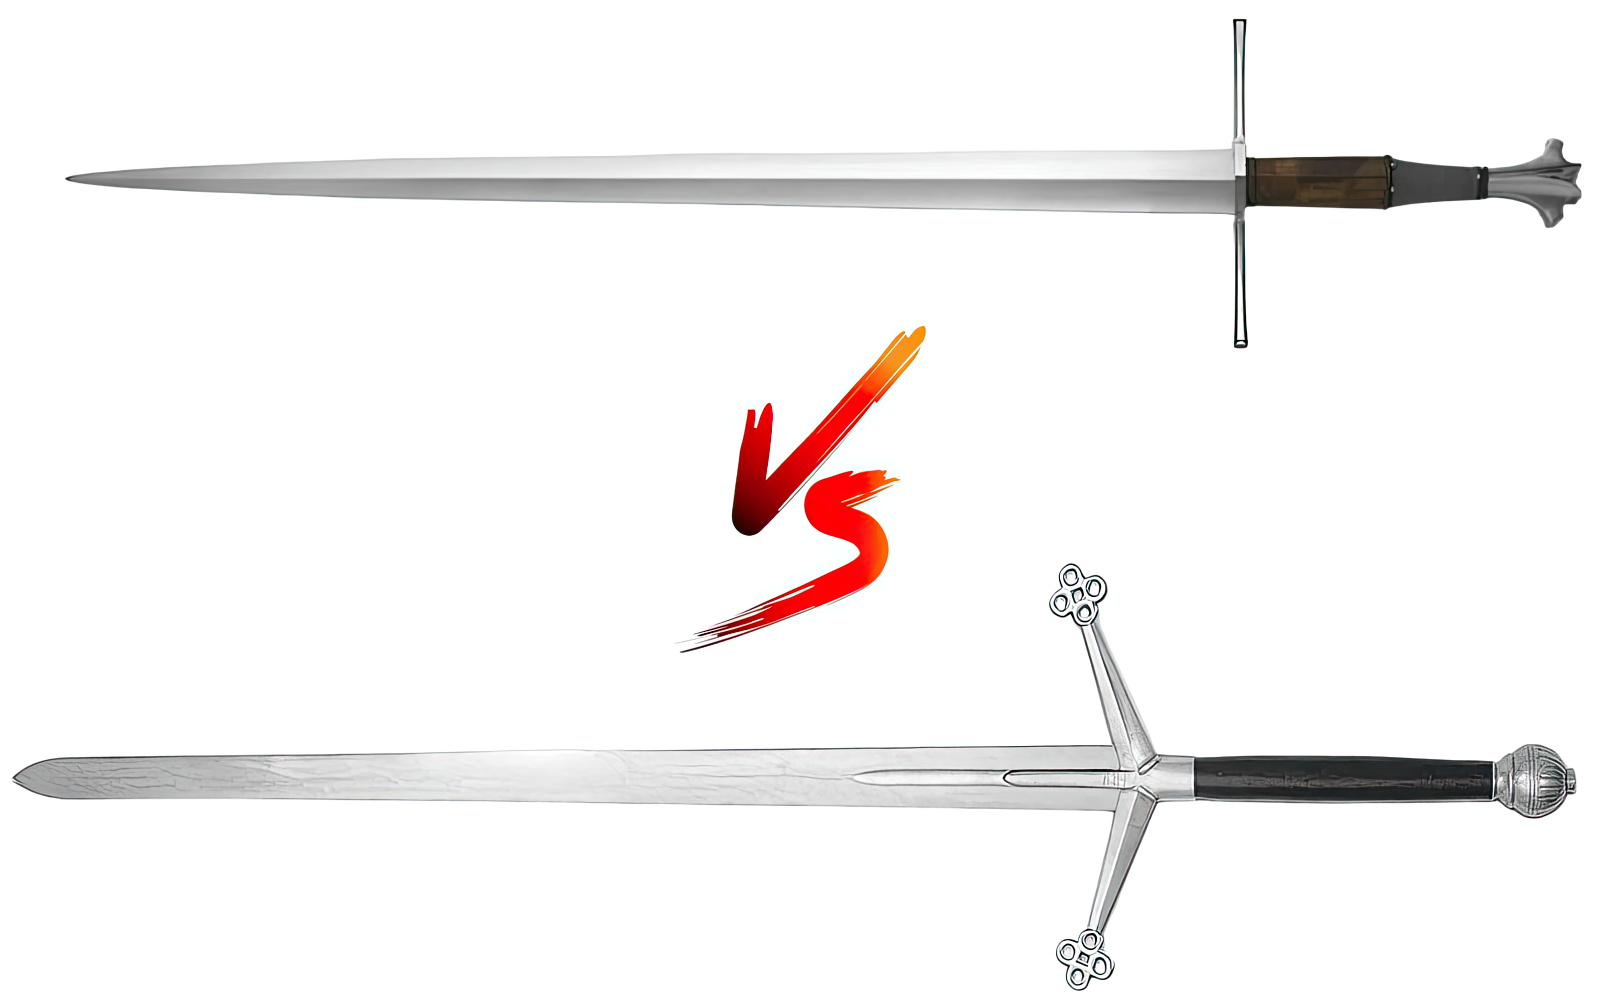 Bastard Sword vs Claymore: Design, History, and Combat Use